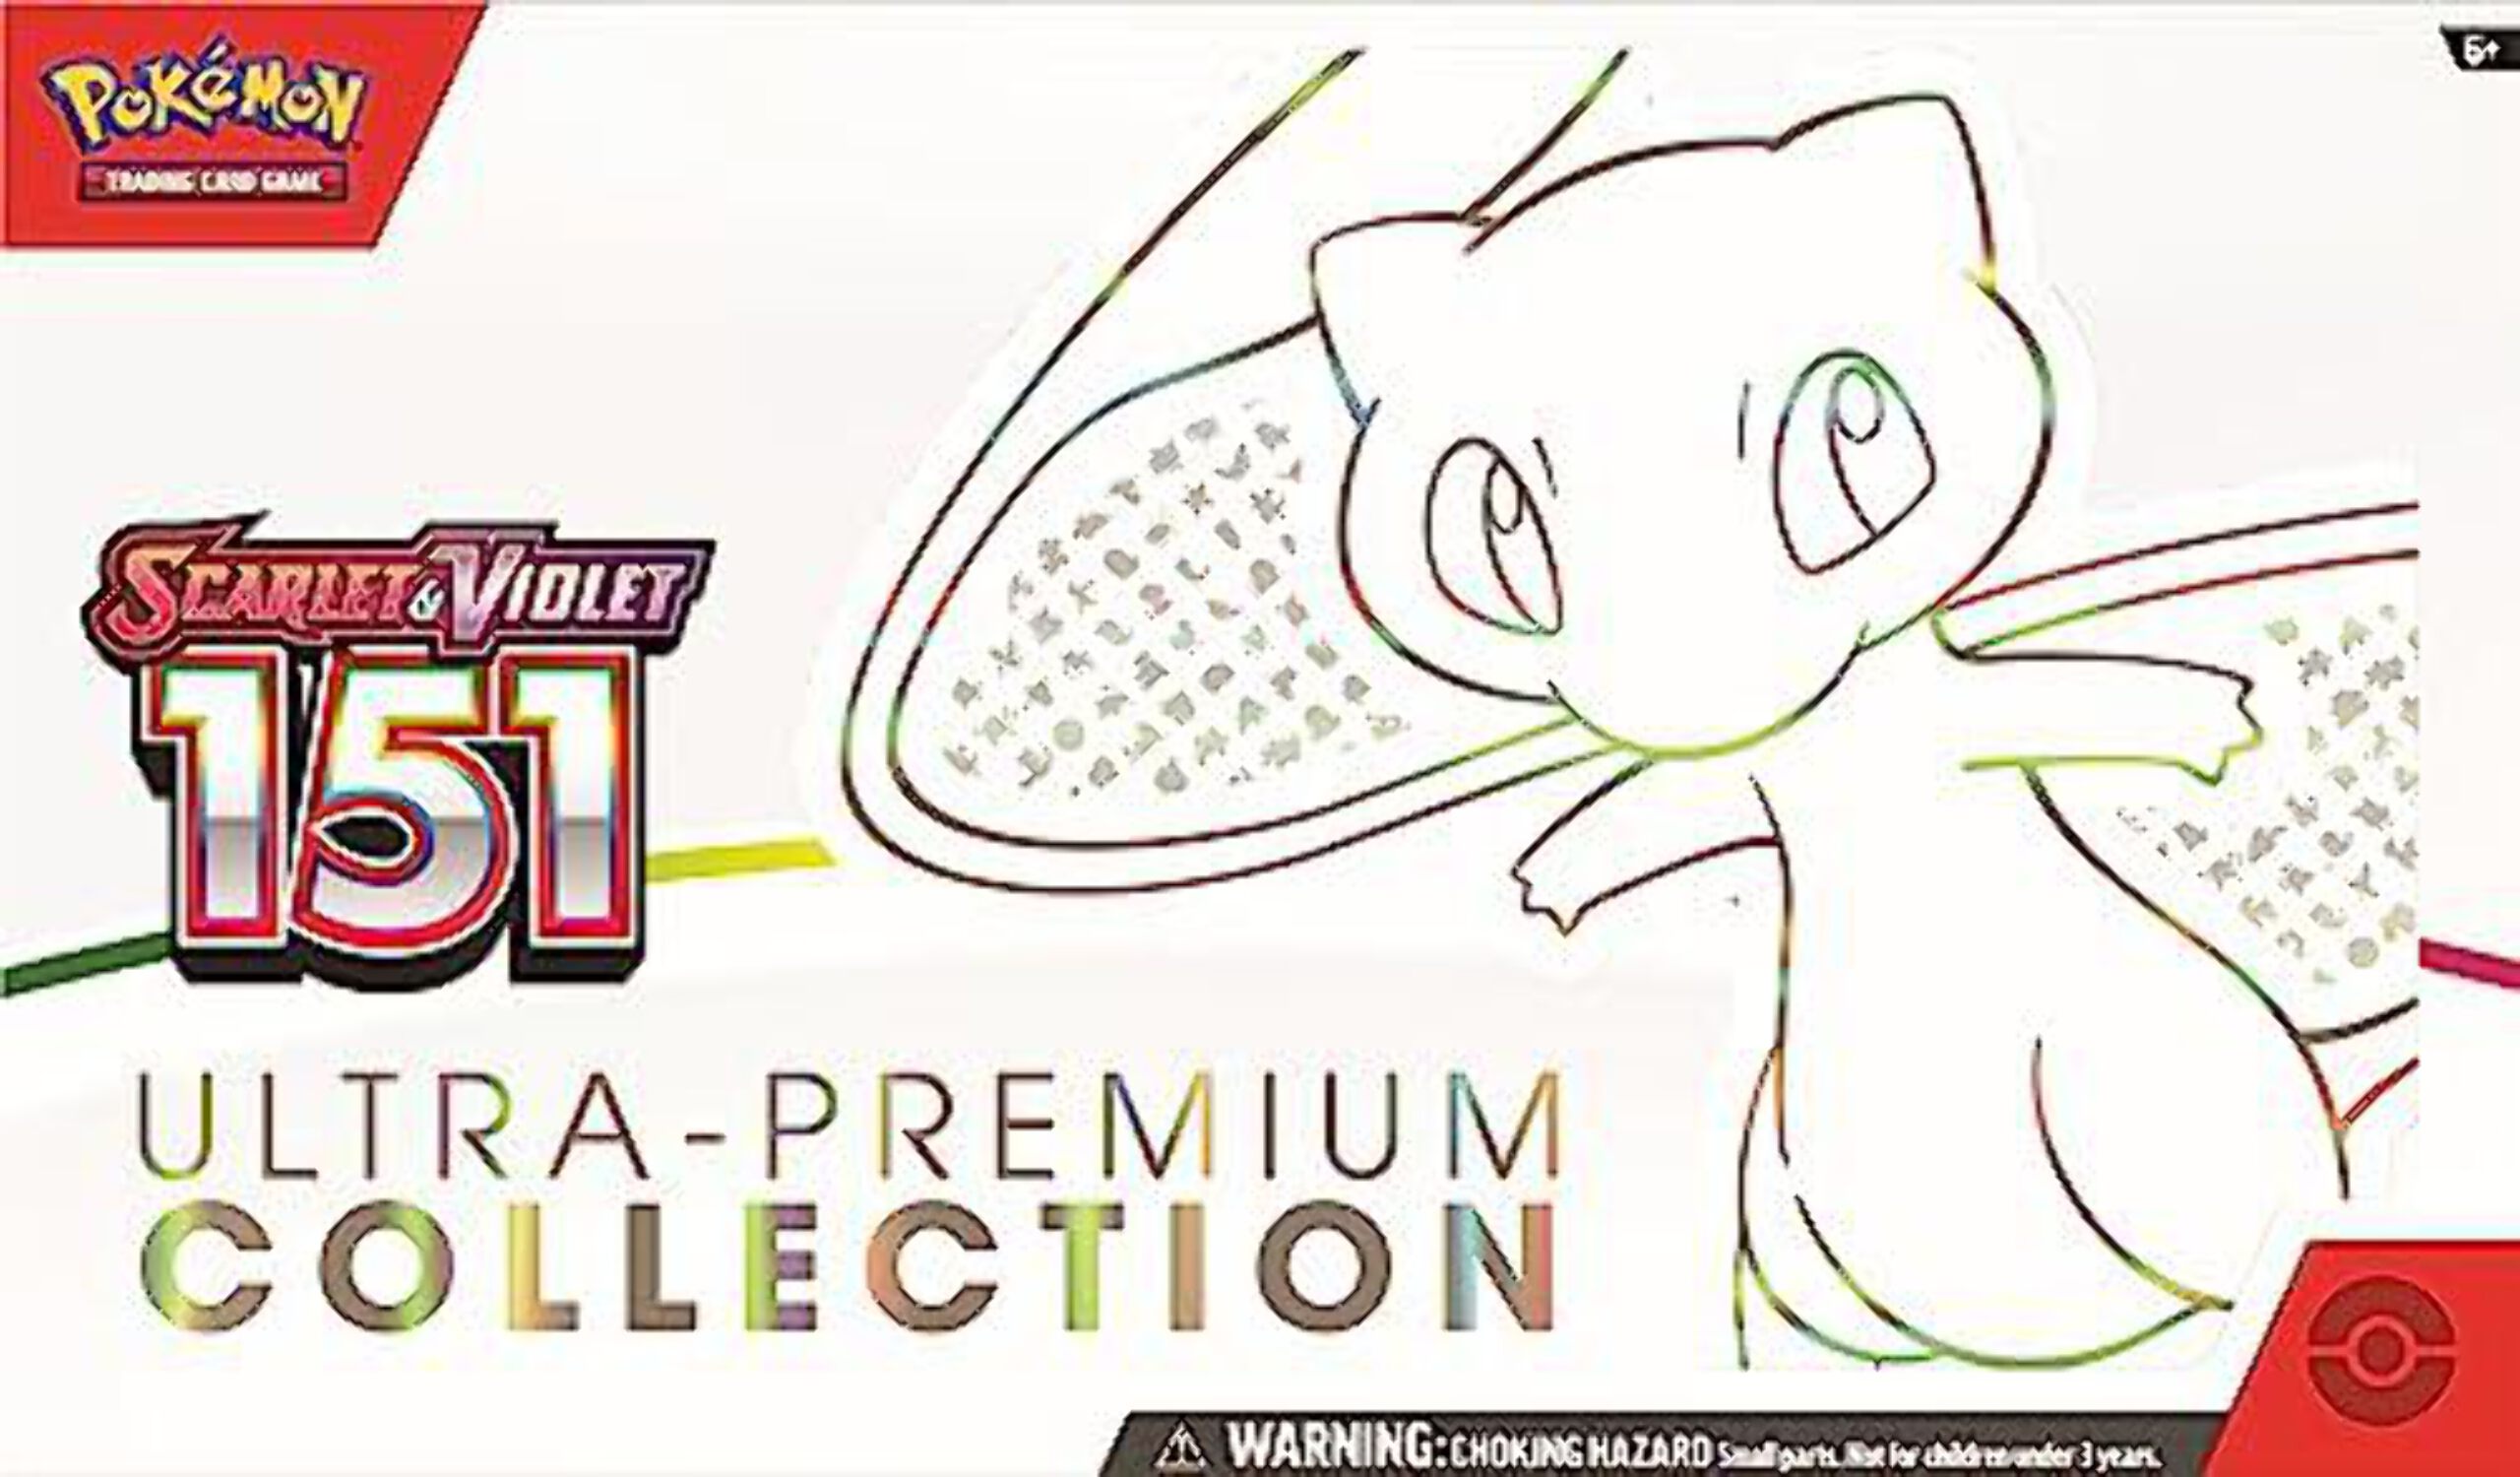 Pokemon Trading Card Games Scarlet & Violet—151 Ultra-Premium Collection - 16 Booster Packs from Pokémon Tcg: Scarlet & Violet—151 - image 5 of 5